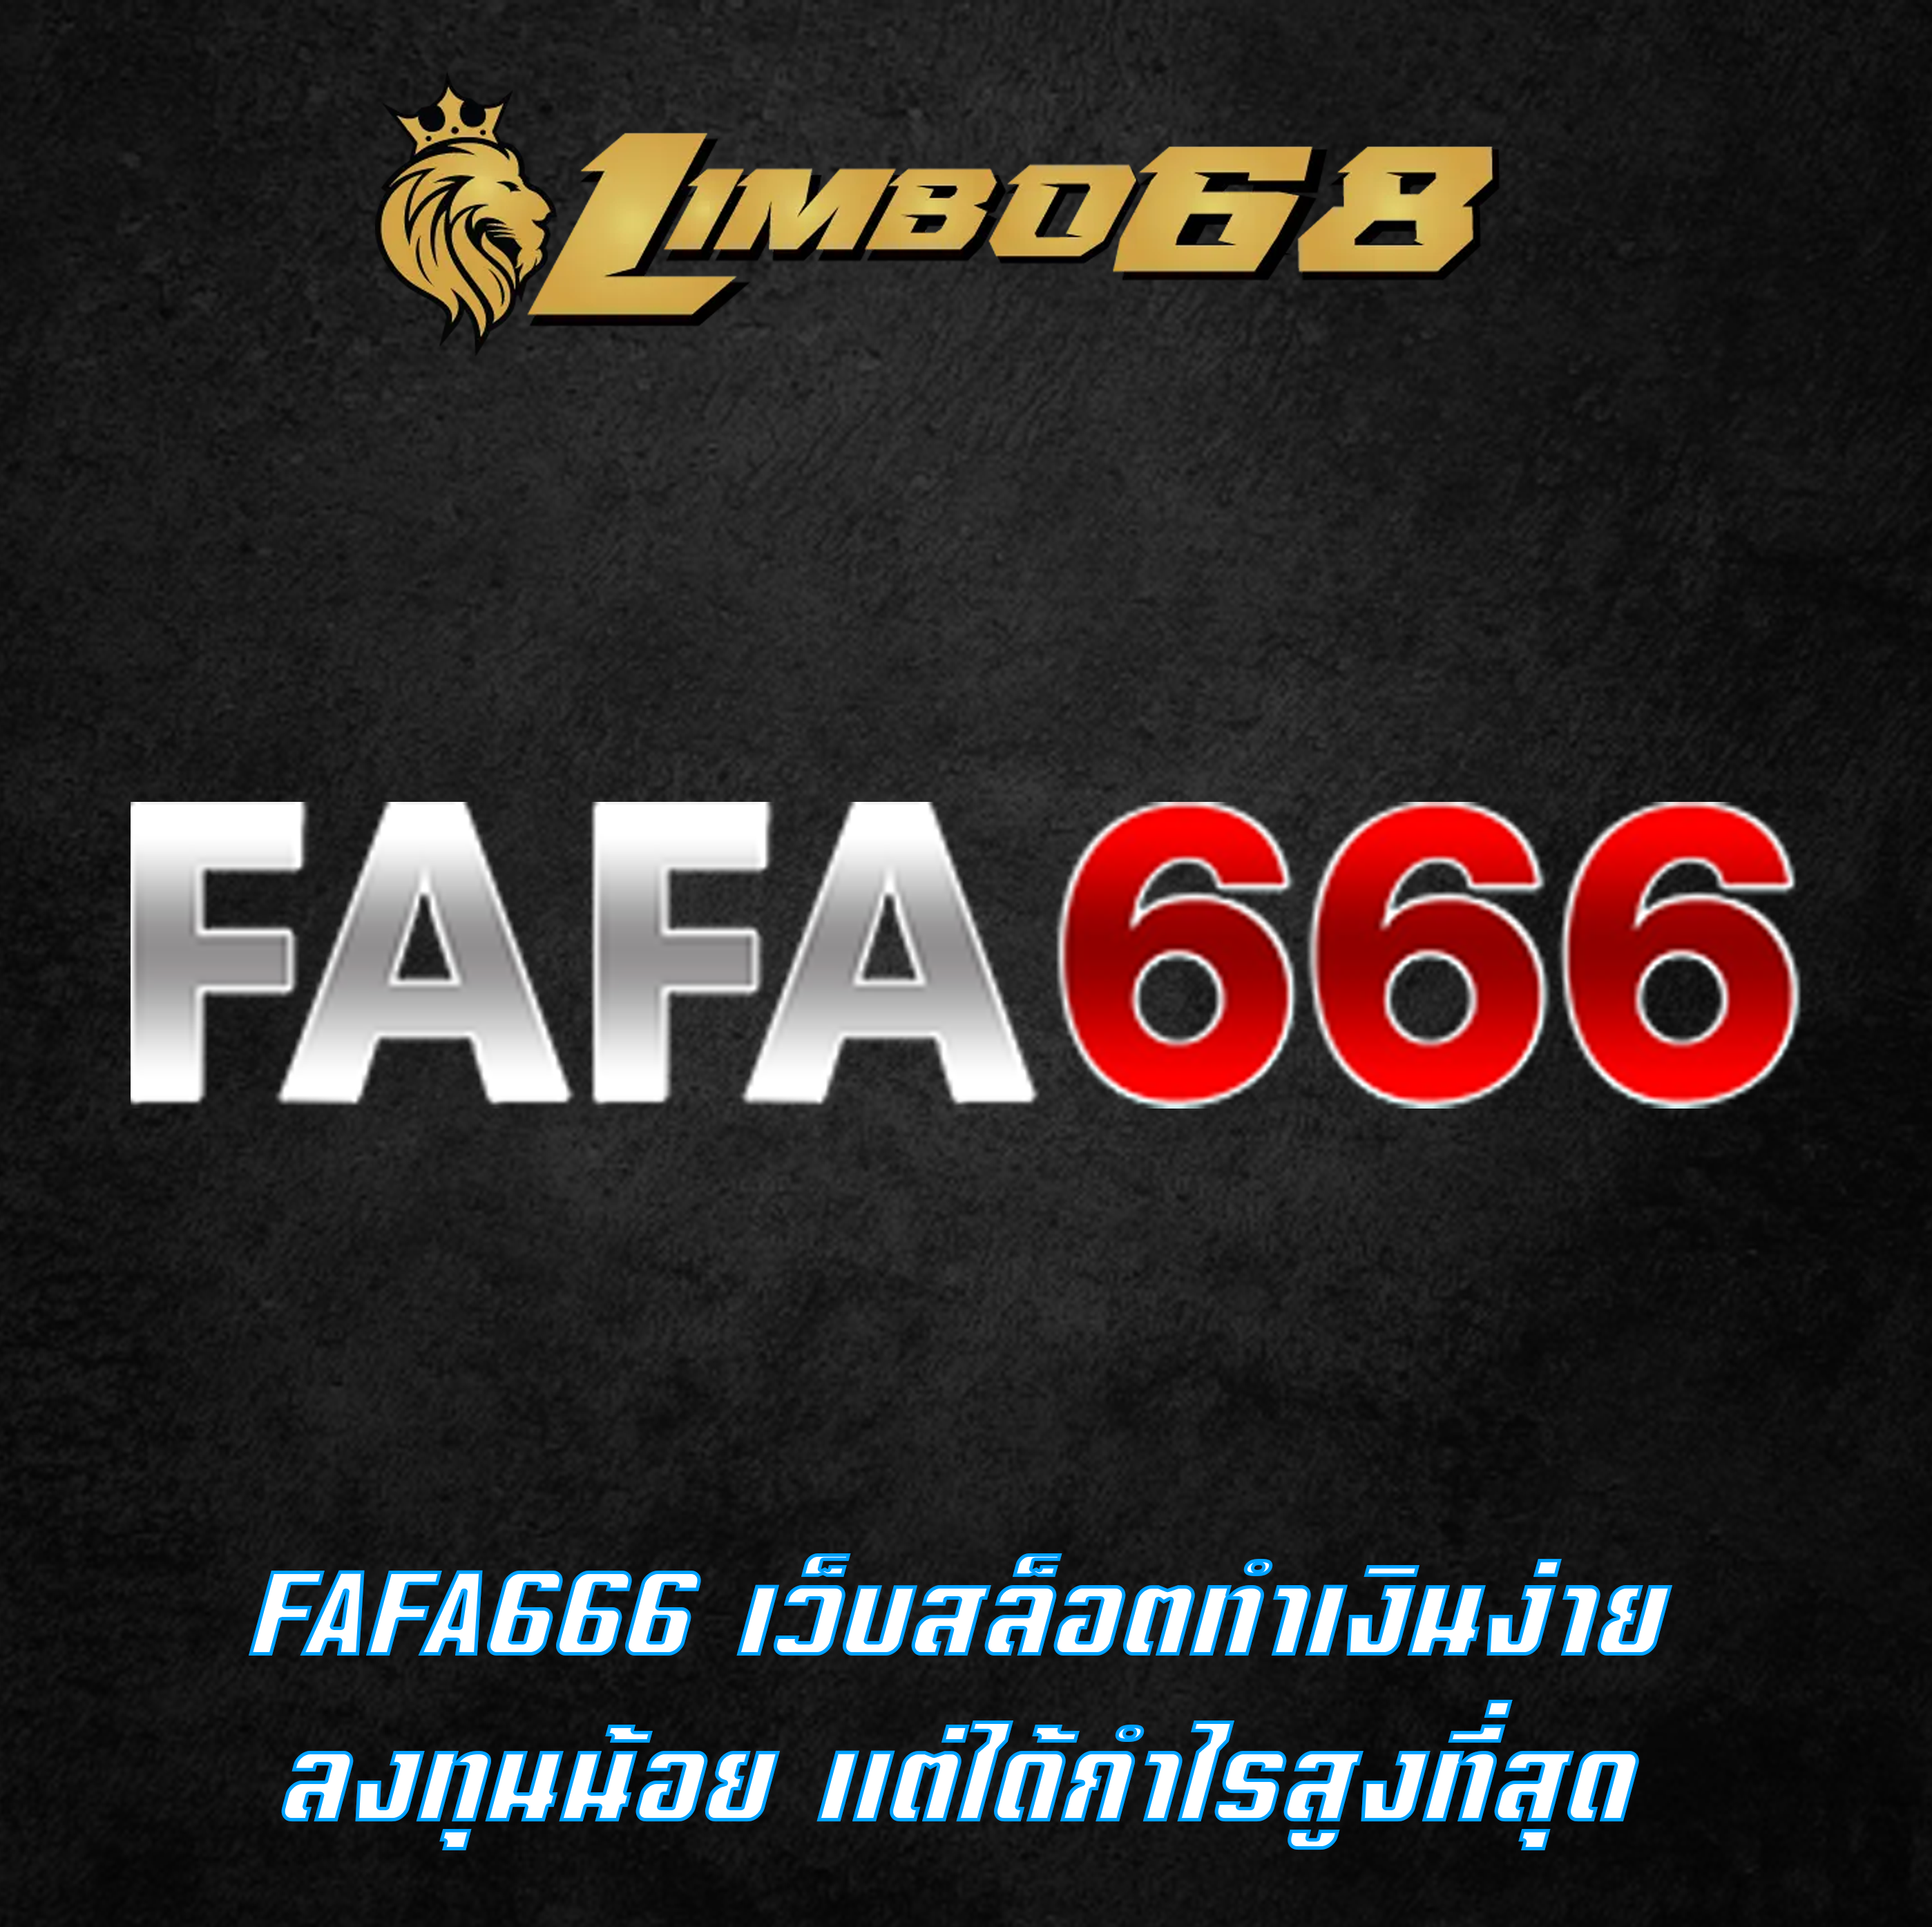 FAFA666 เว็บสล็อตทำเงินง่าย ลงทุนน้อย แต่ได้กำไรสูงที่สุด